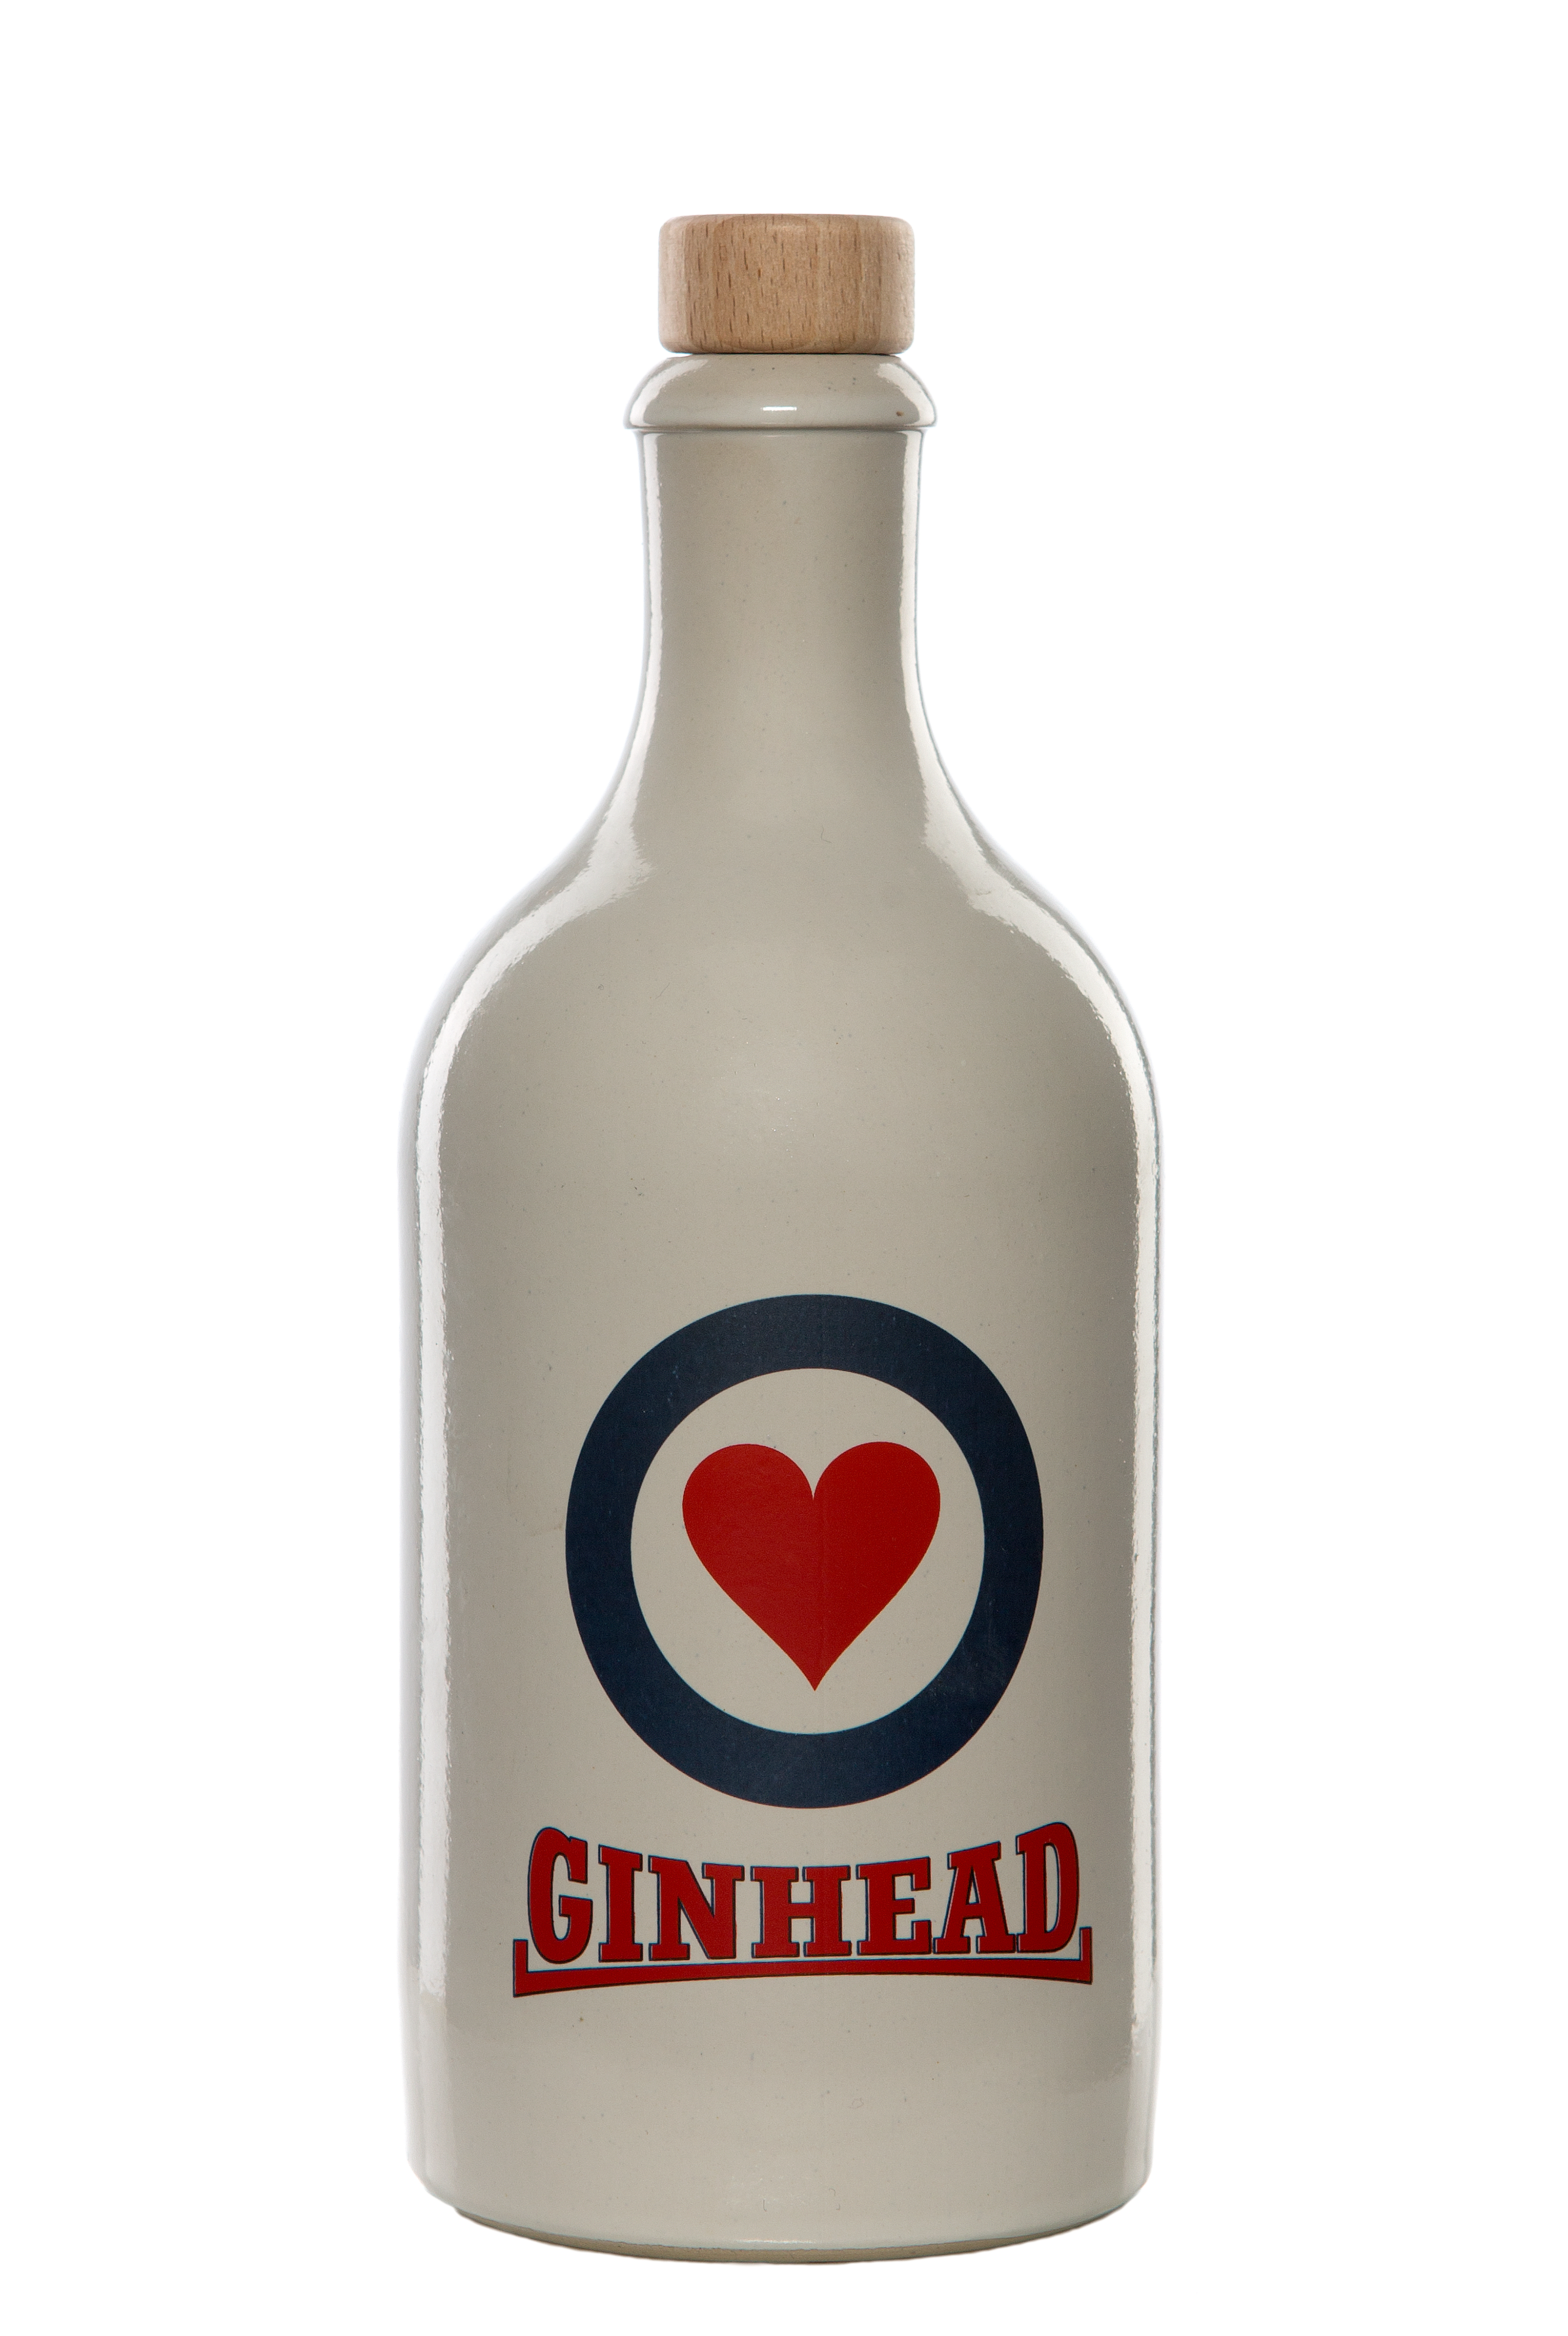 Ginhead Spirit of Islay Edition 2021